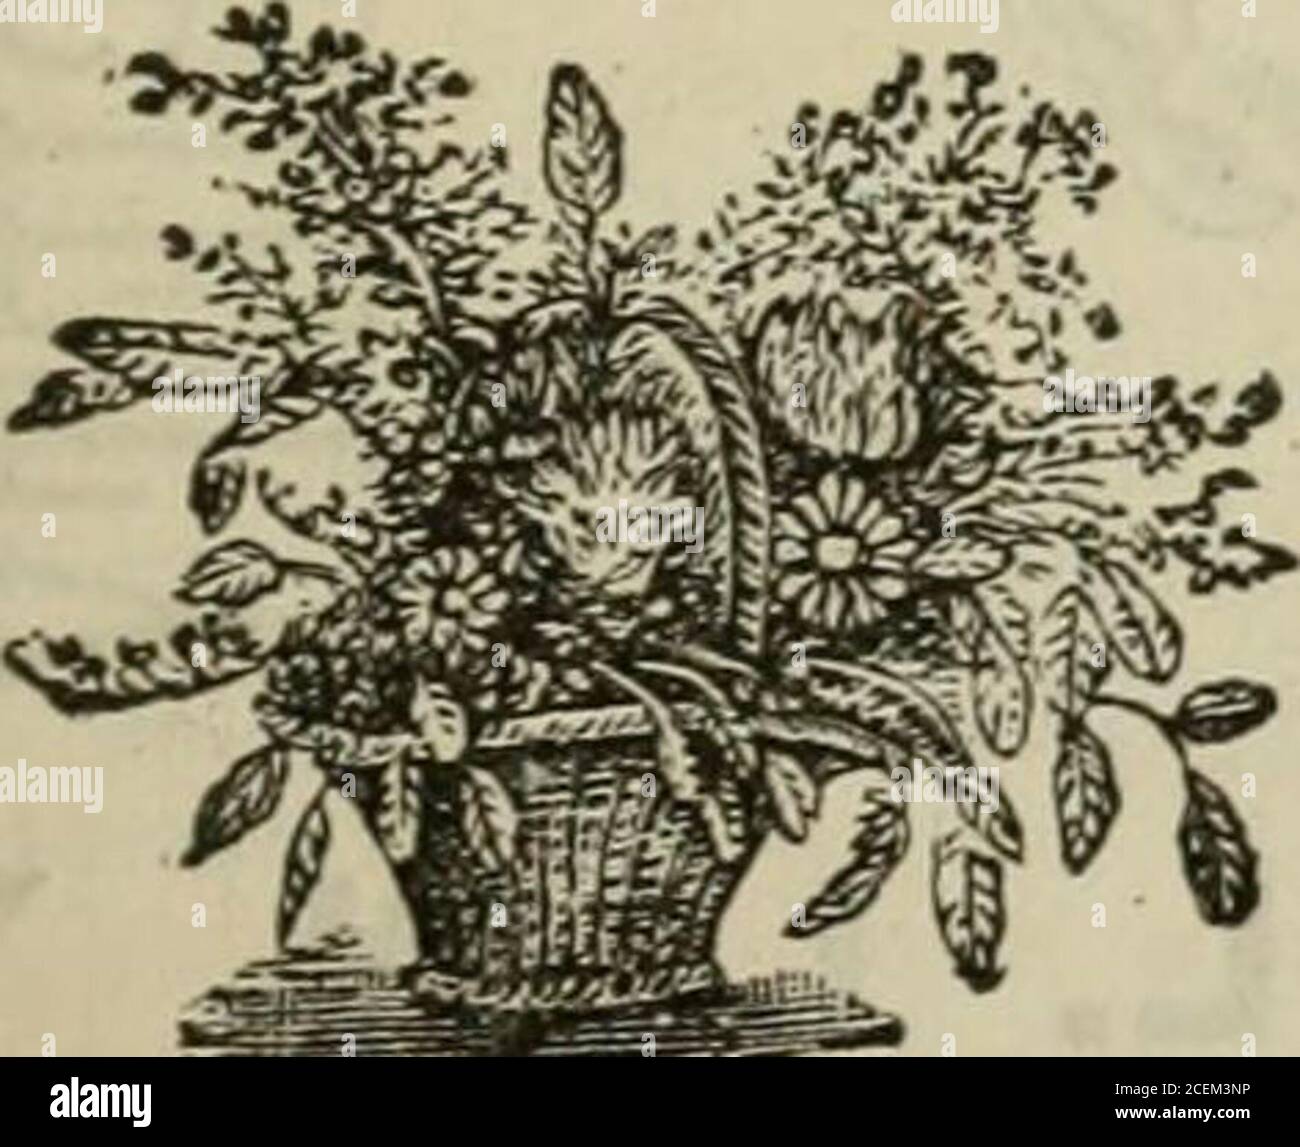 . The Gardener's monthly and horticulturist. ba, &c. LYCASTE SKINNERII-A grand winter-floweringOrchid. ODONTOCLOSSUMS-Grande, Bictonlaensis, &e.PH^LANOPSIS—Amabilis, Schilleriana, &c.SACCOLABIUM—Blumei majus, Guttatum, Ainpula- ceum, Violaceura, Curvifolium, &c.CCELOCYNES ; Tricopilias; Vandas; Masdevallia; Bar- keria; Calantha ; Chysis; Coryanthes; Phajus ; Stan- hopea ; Sobralia ; &c.All are offered much lower than can be purchased In Europe.a&- CATALOGUES ON APPLICATION.-^l t.J18 JOHN SAUL, WASHINGTON, D. C. BPIEWDID AND WONDERFtTl VARIETY OPORNAMENTAL i GRASSES EVERLASTING FLOWERS AND IMMO Stock Photo